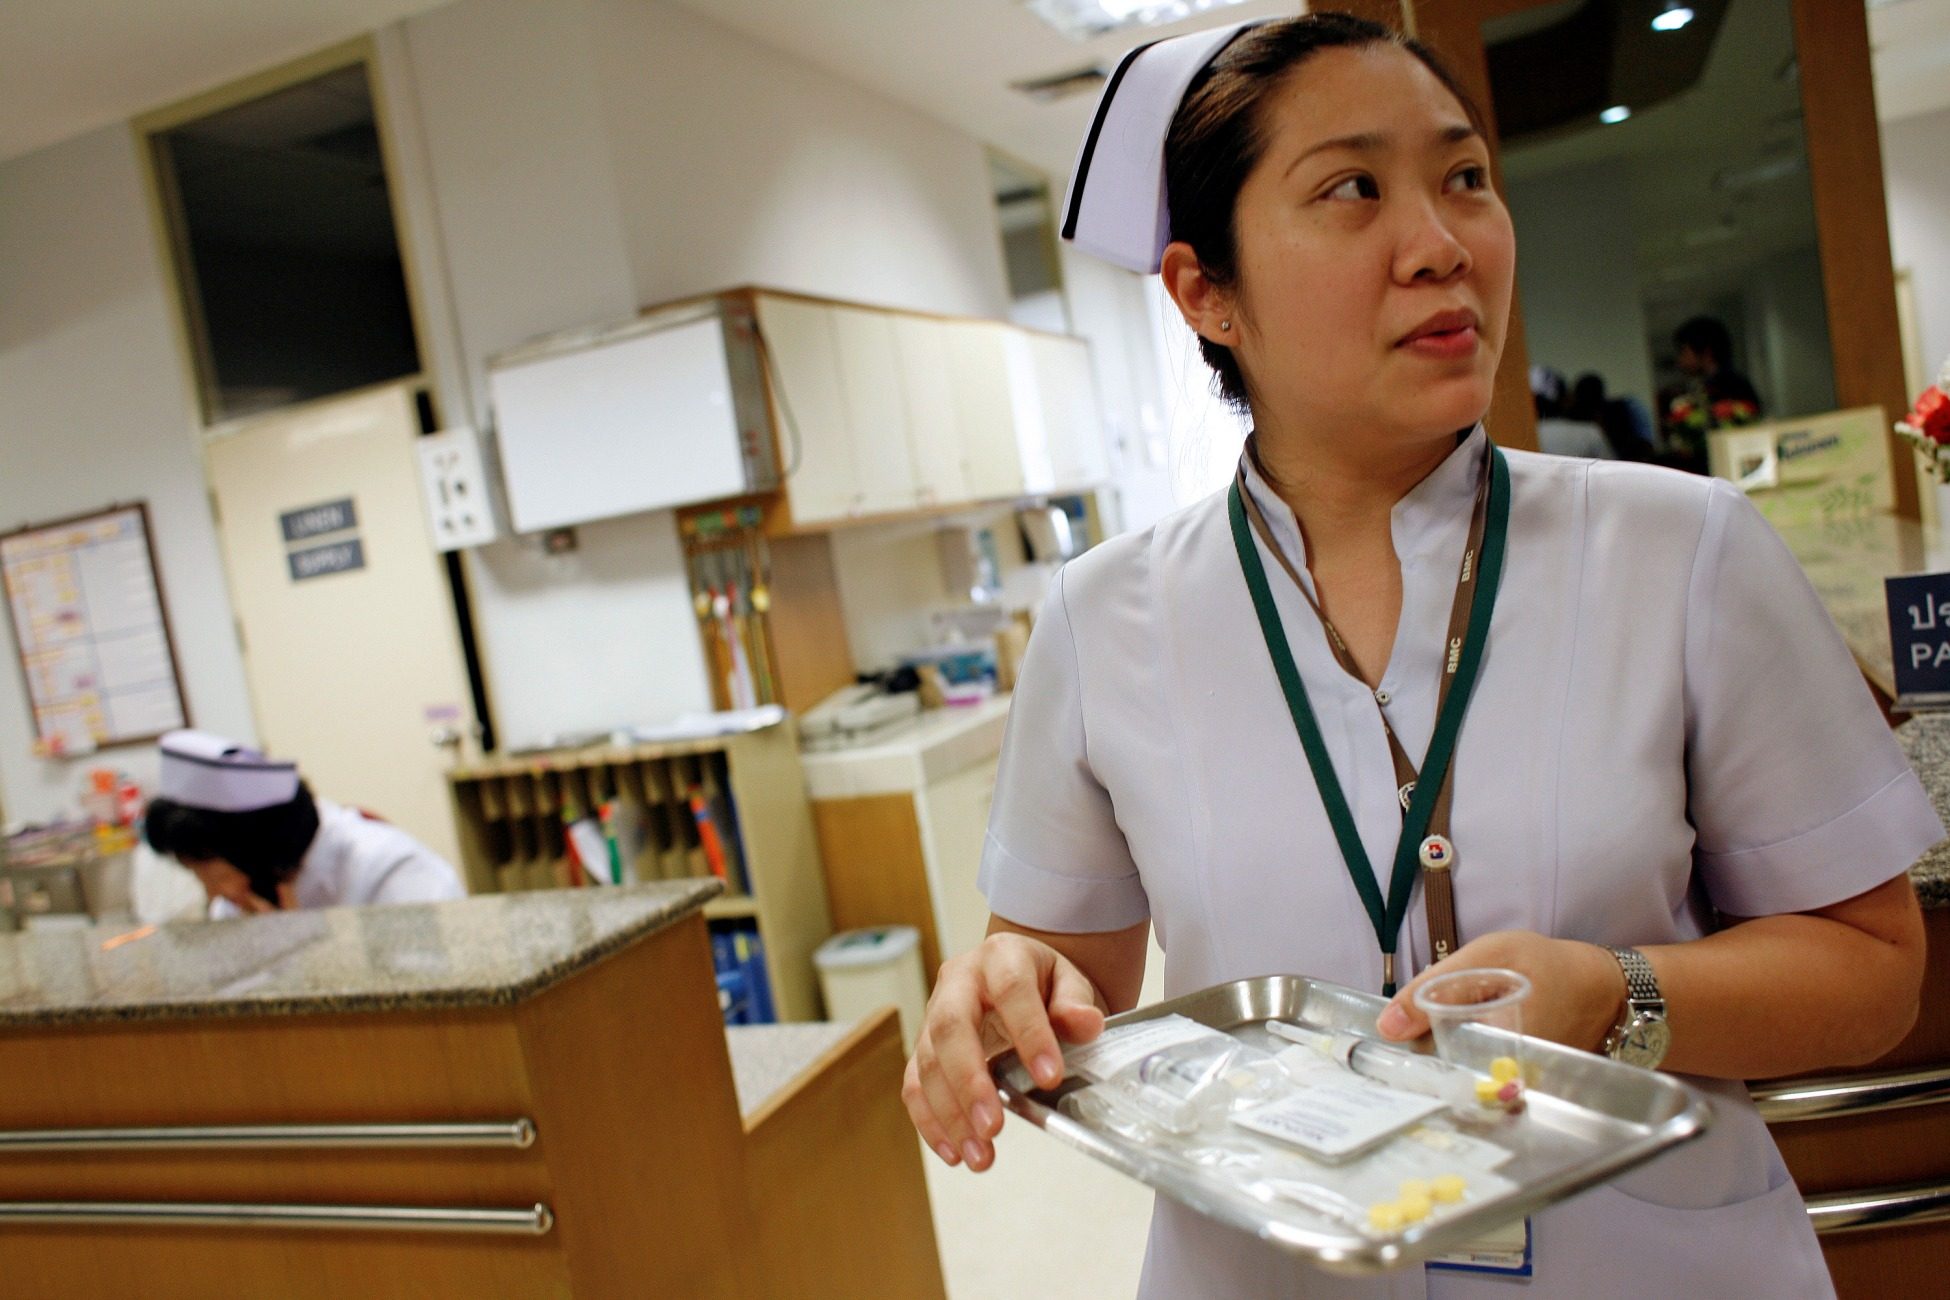 Bangkok Dusit Medical now boasts a $13b empire courtesy ageing population, medical tourism